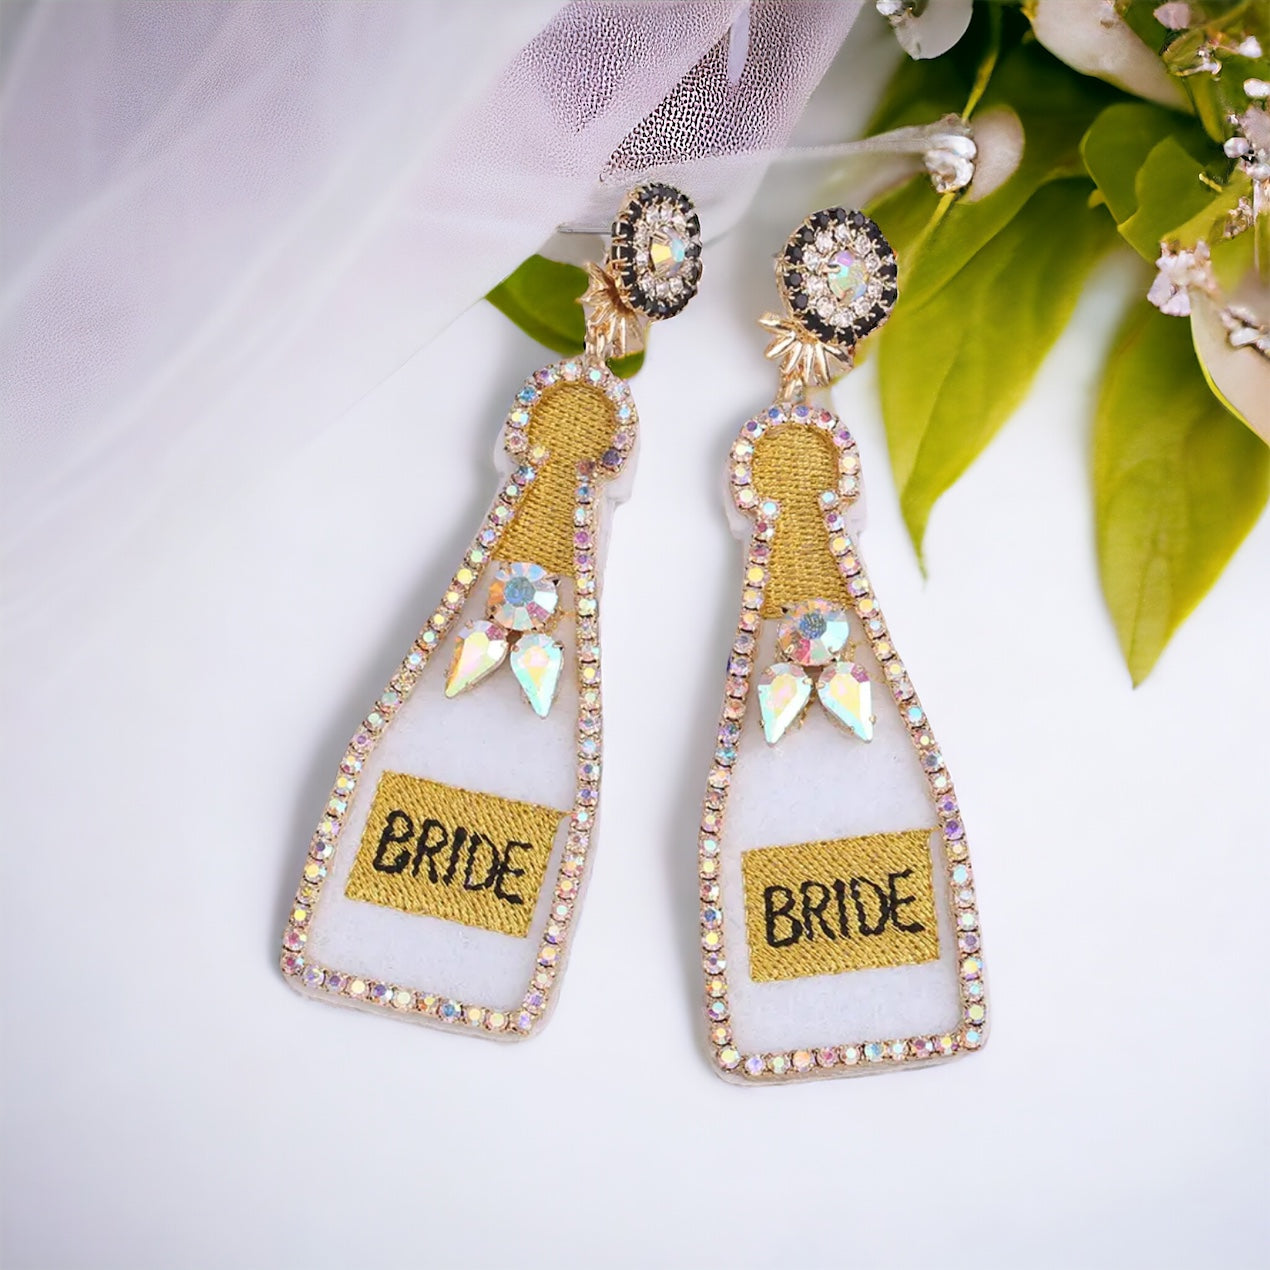 Beaded Bride Earrings - Bridal Shower, Valentine’s Day, Beaded Earrings, Engagement Party, Honeymoon, Bridal Earrings, Bridal Accessories, Bride Tribe, Bachelorette